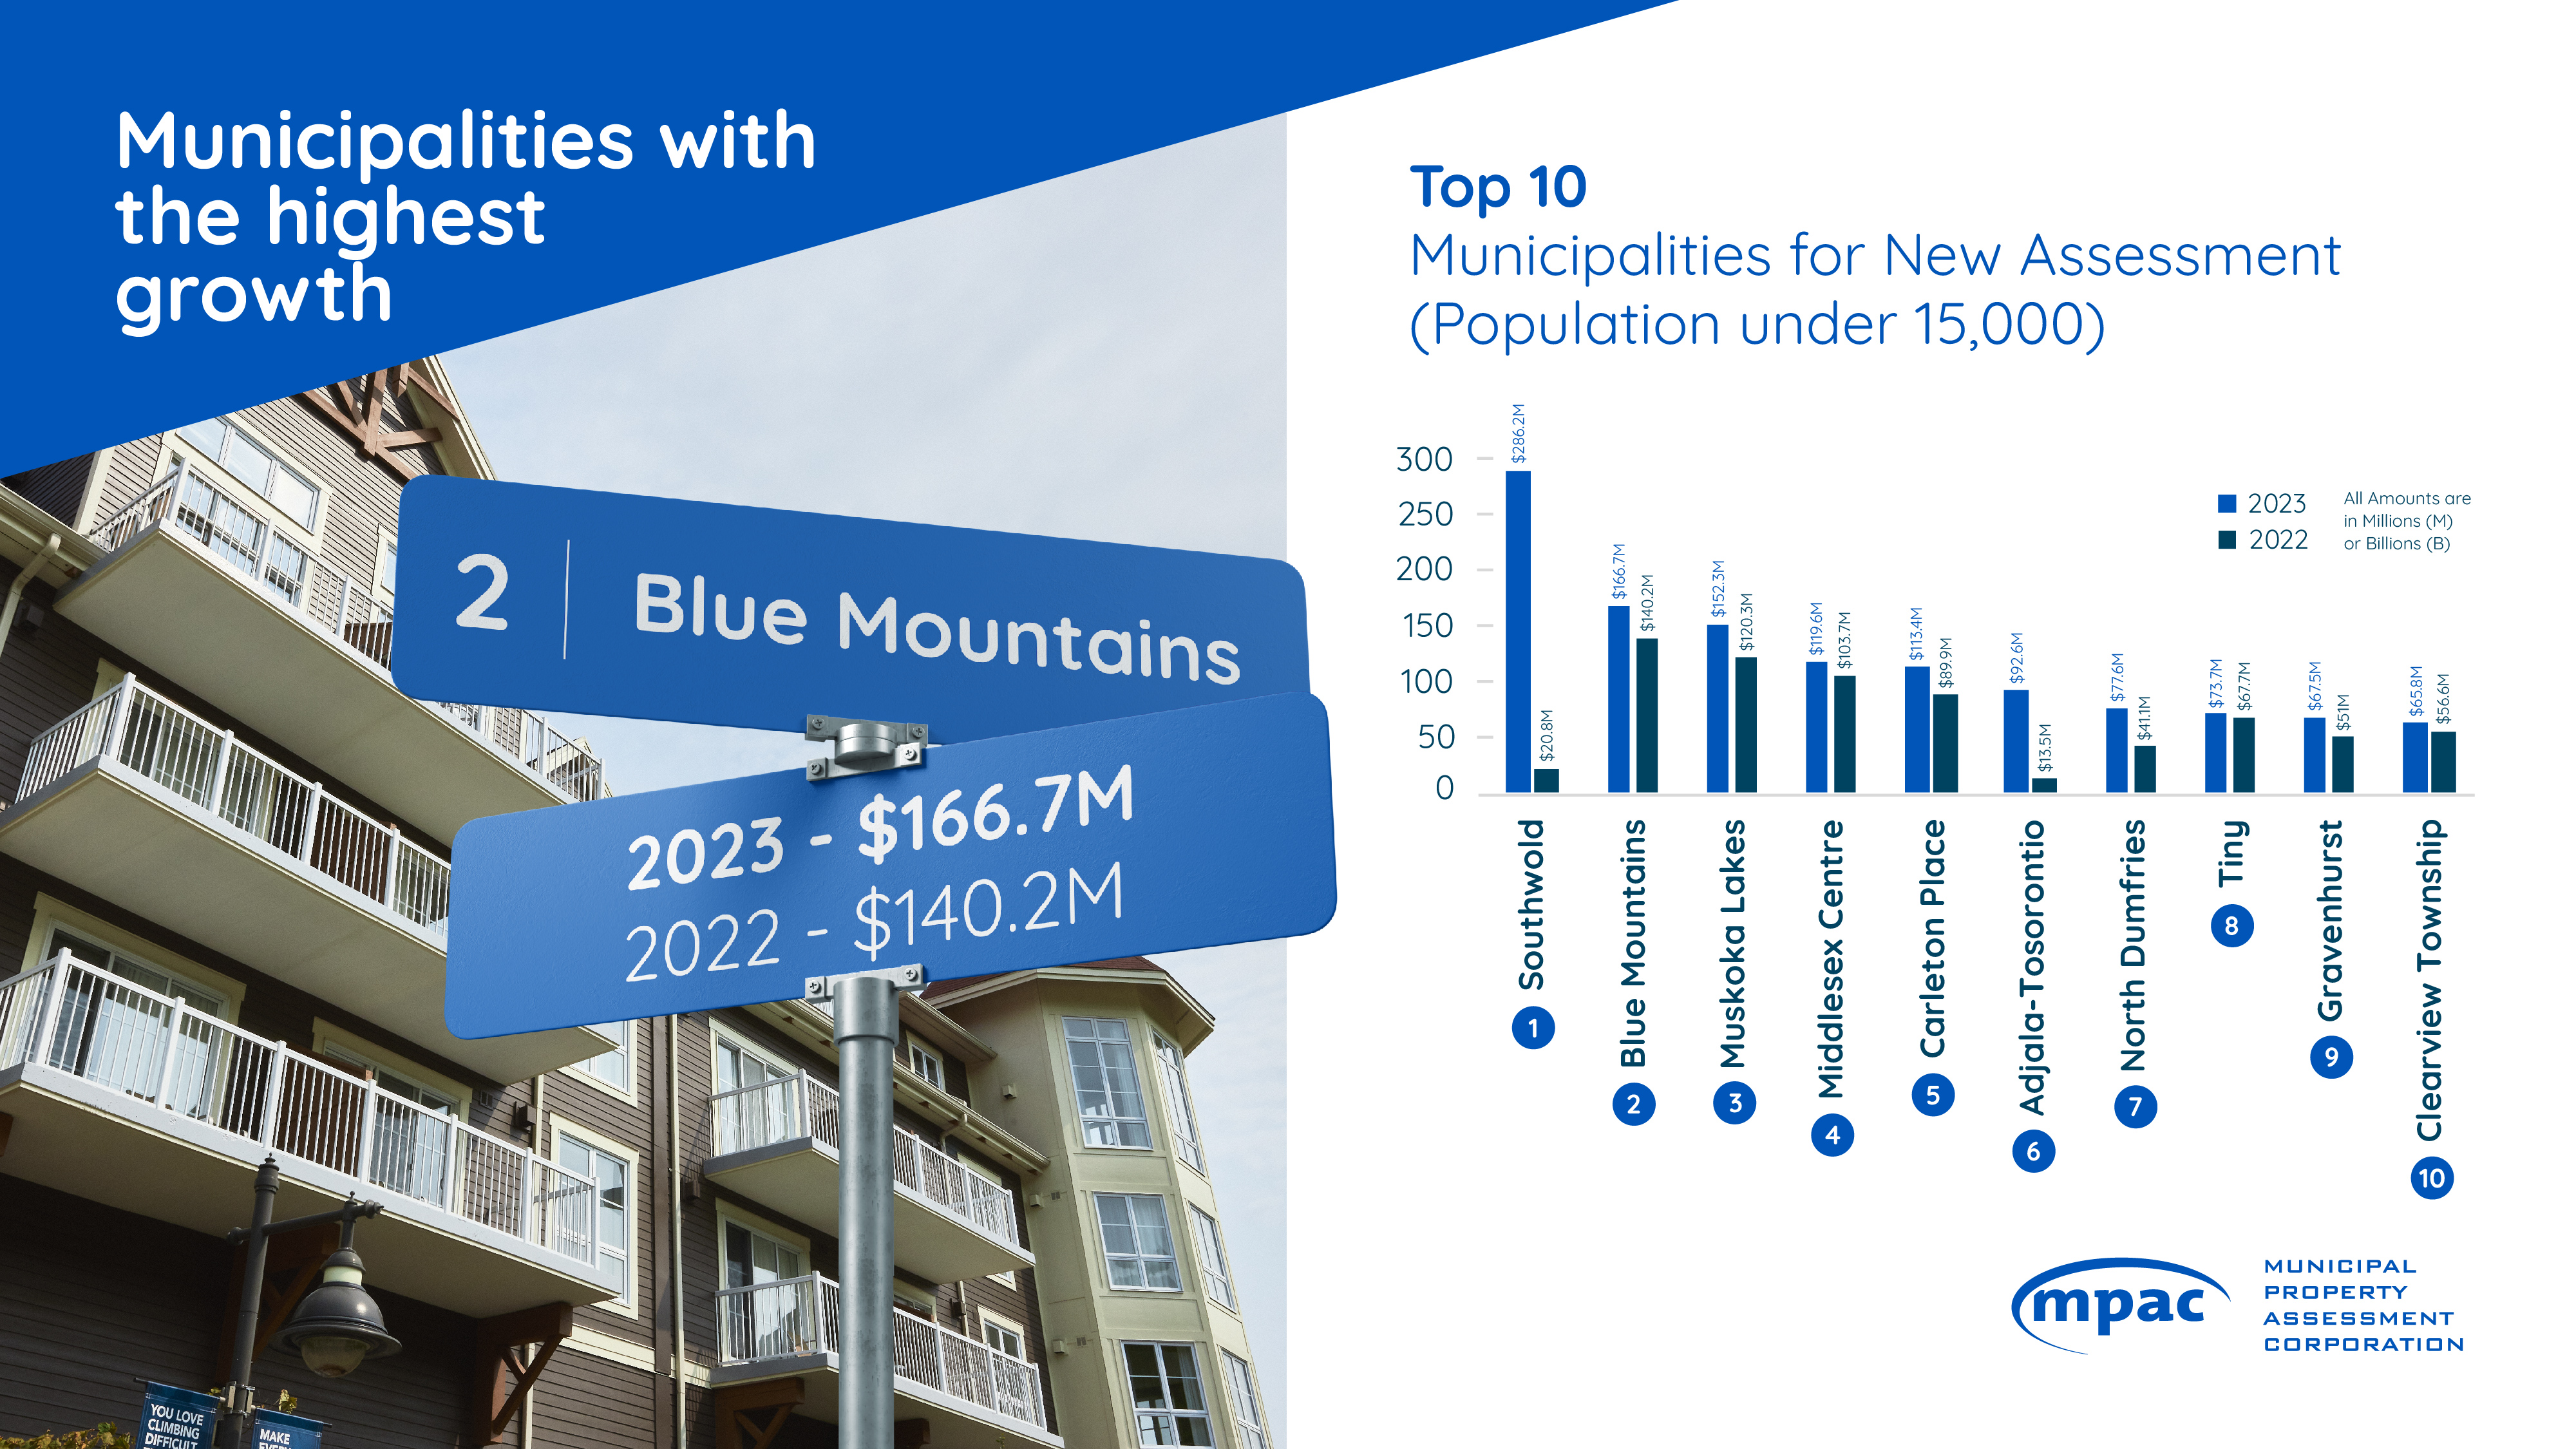 Top 10 Municipalities for New Assessment (Population under 15,000)